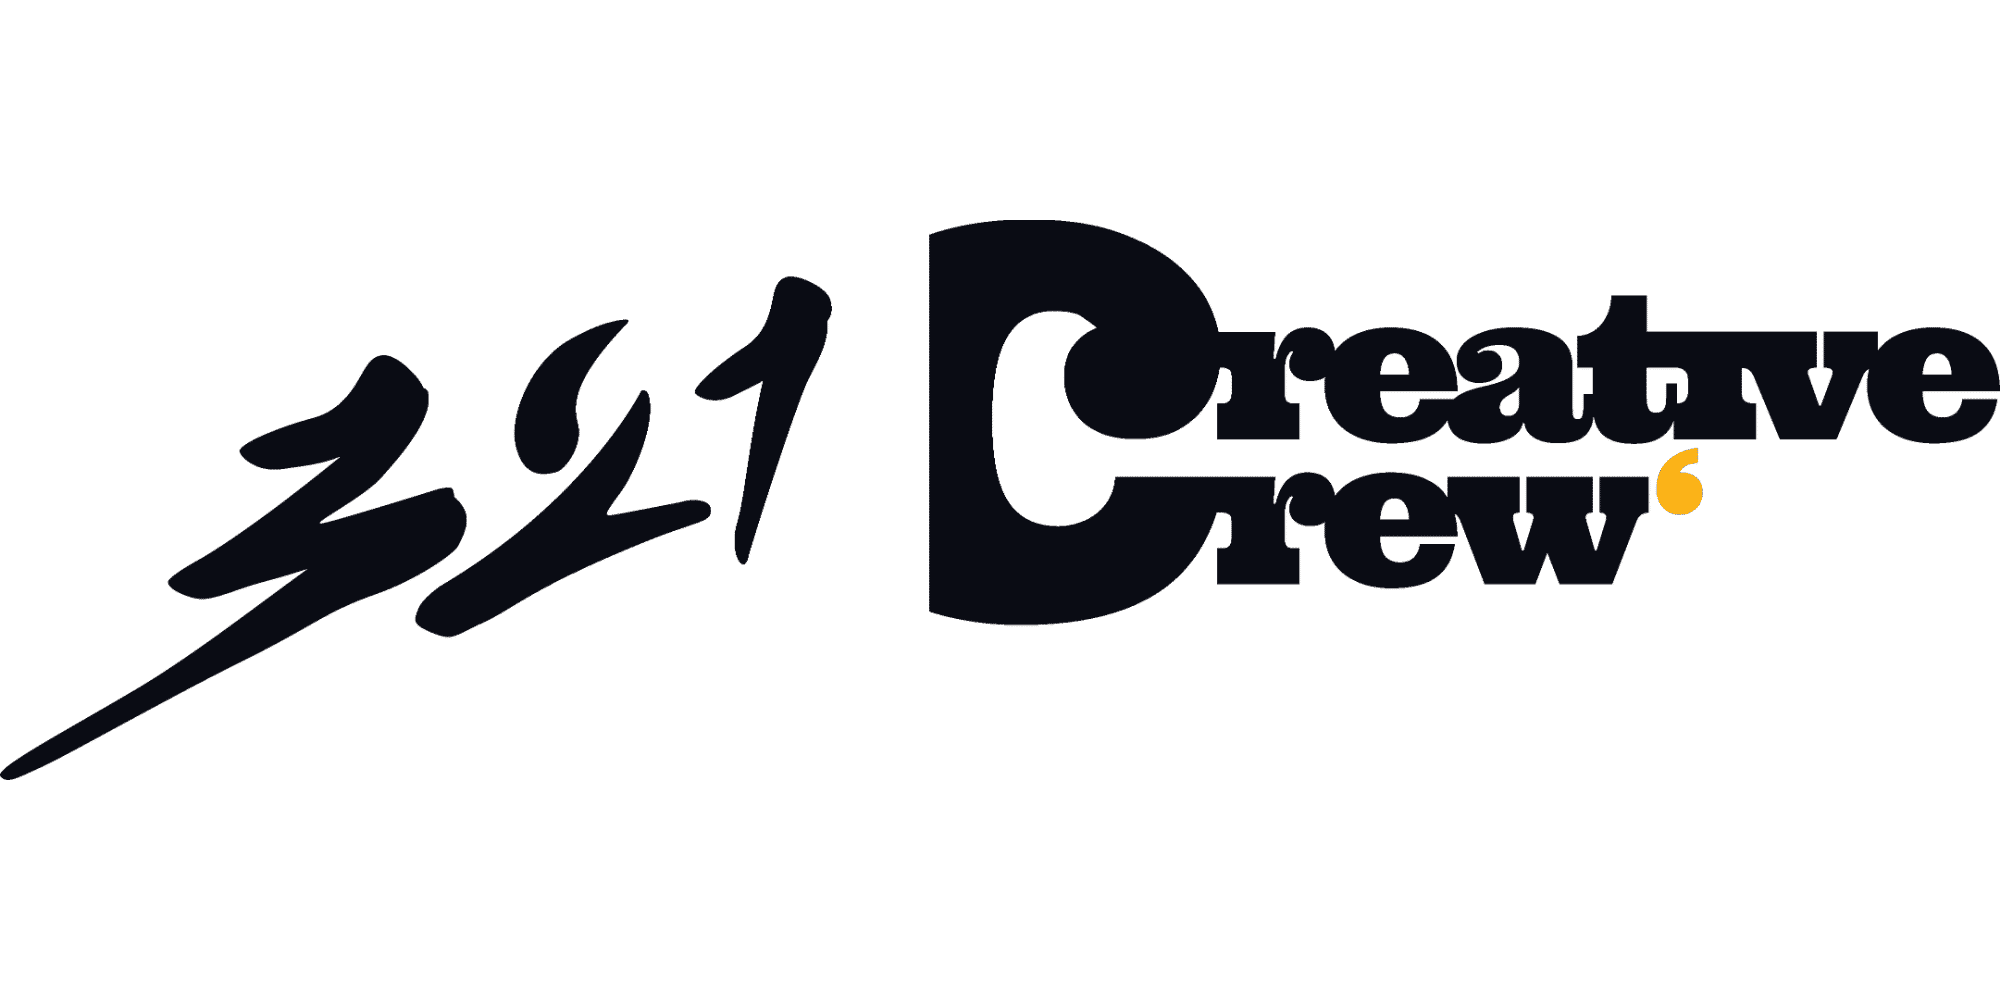 321 Creative Crew, logo